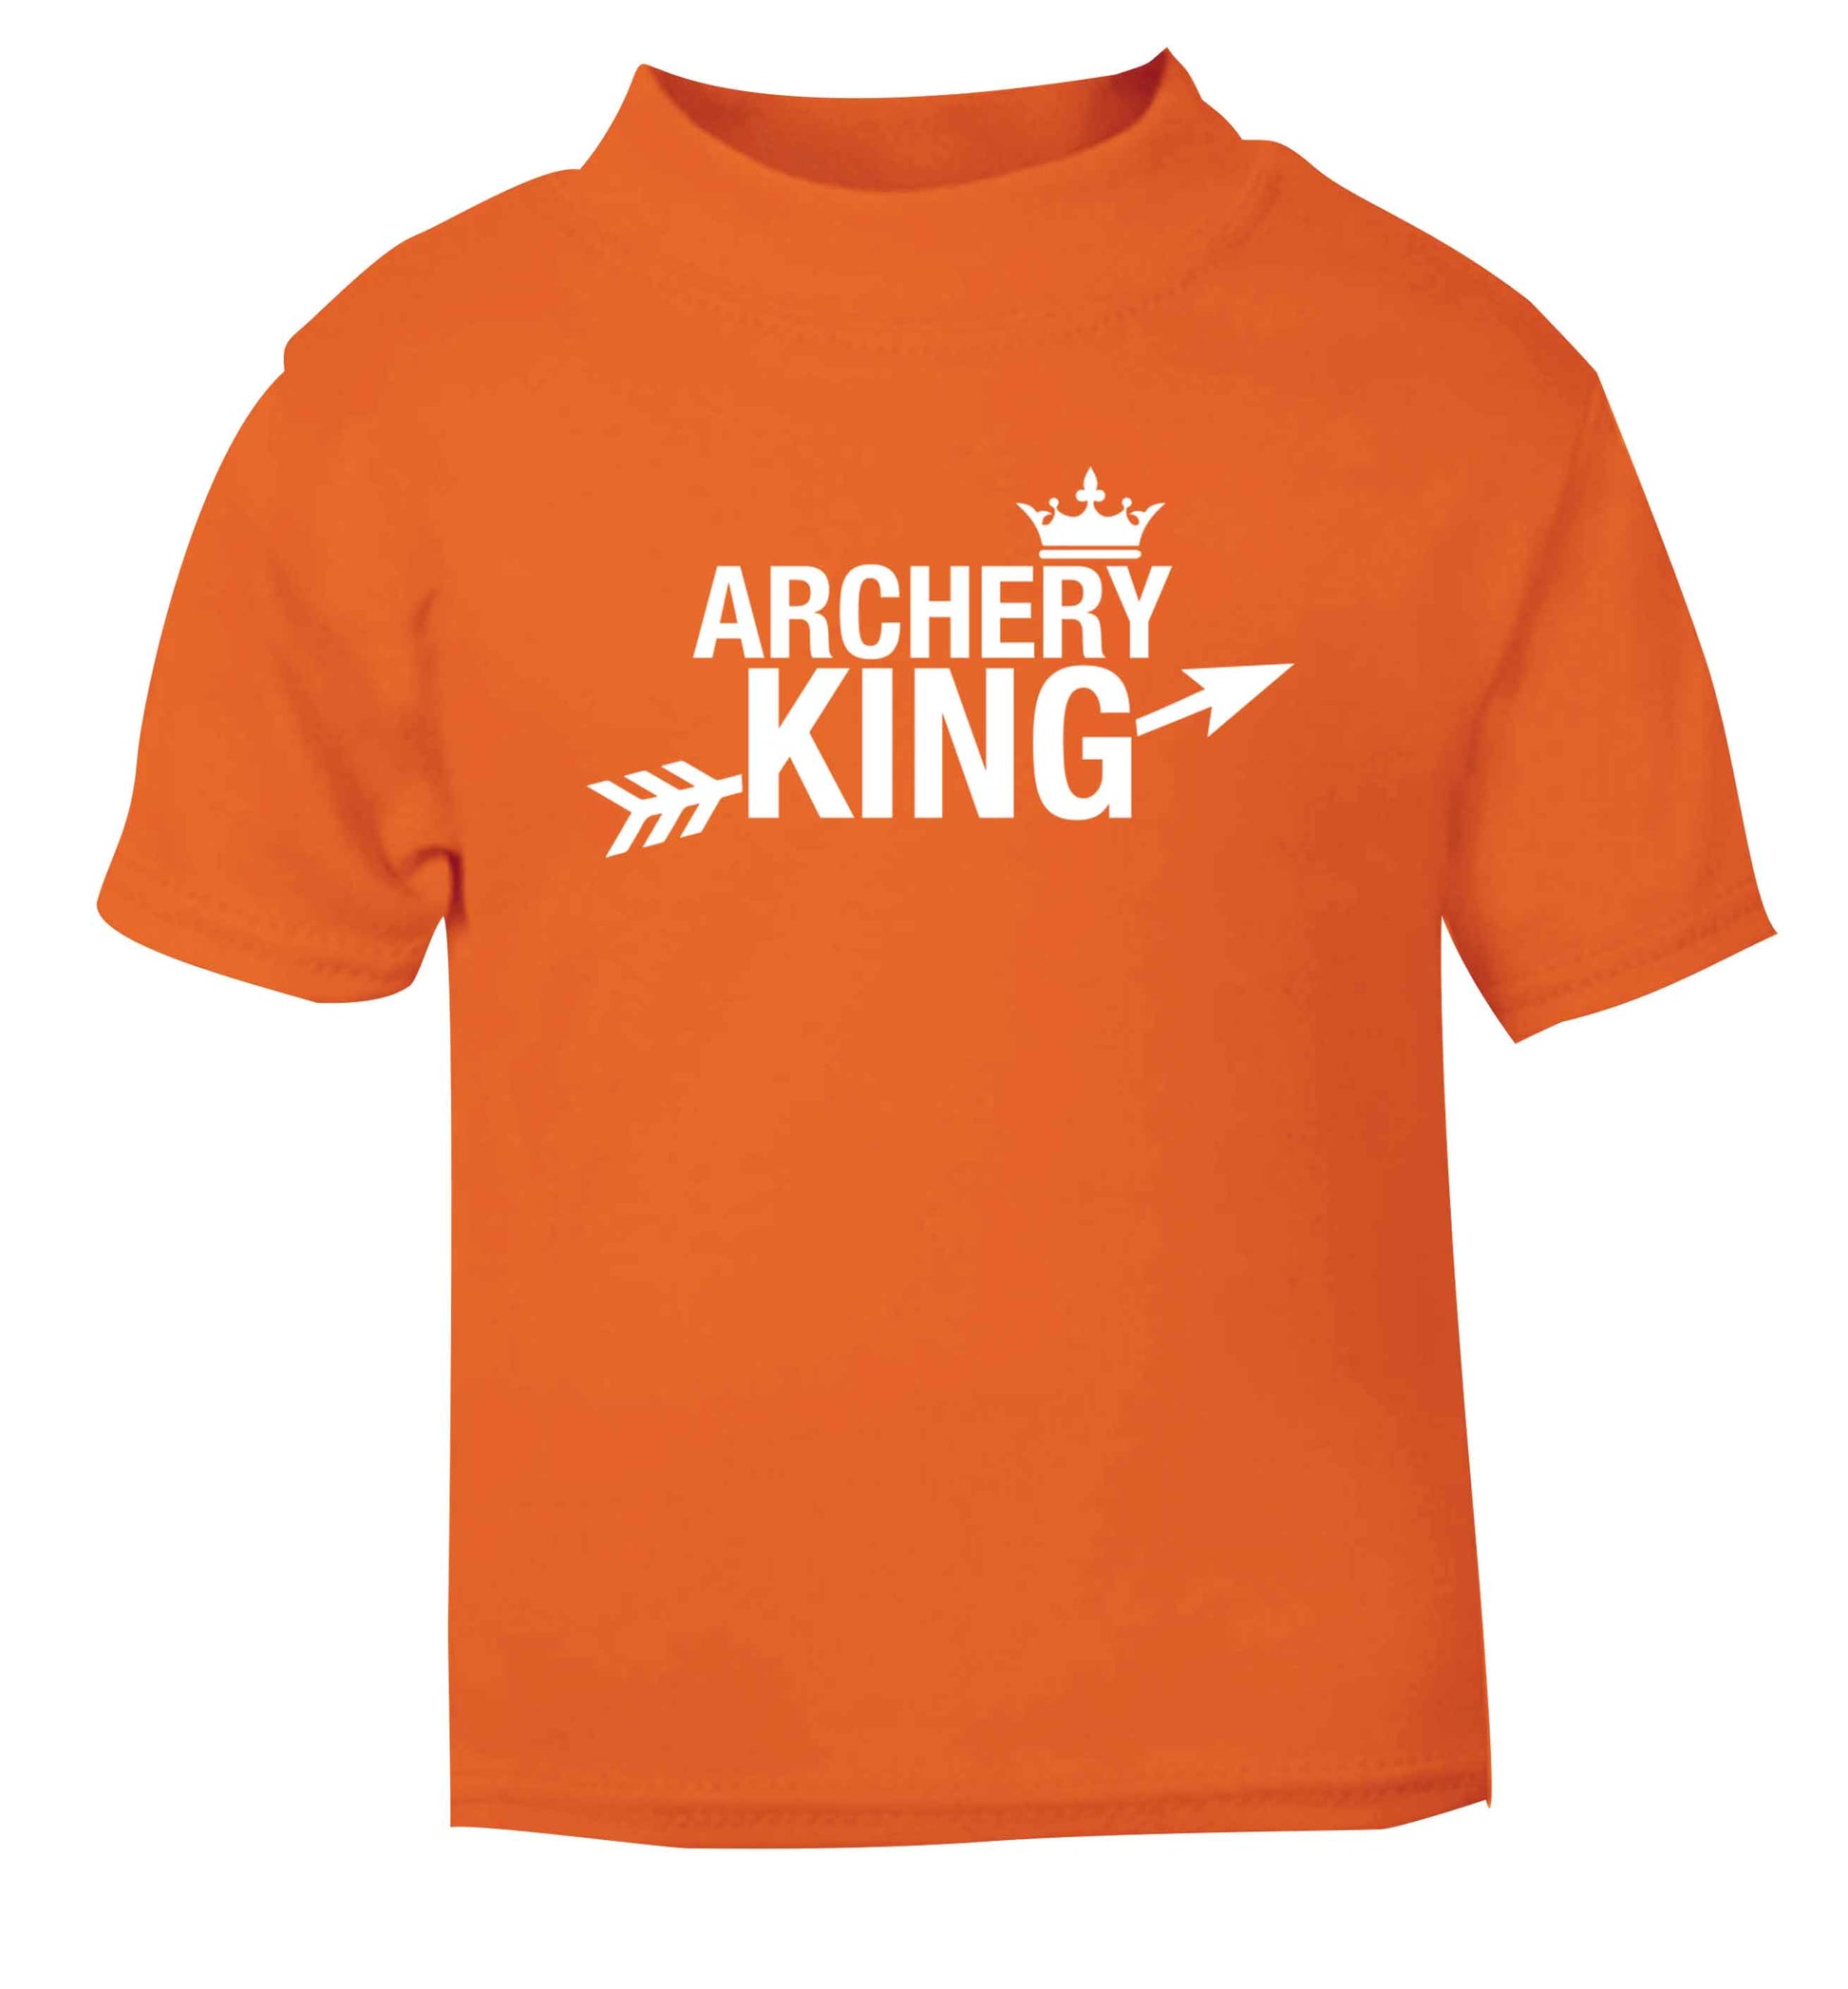 Archery king orange Baby Toddler Tshirt 2 Years